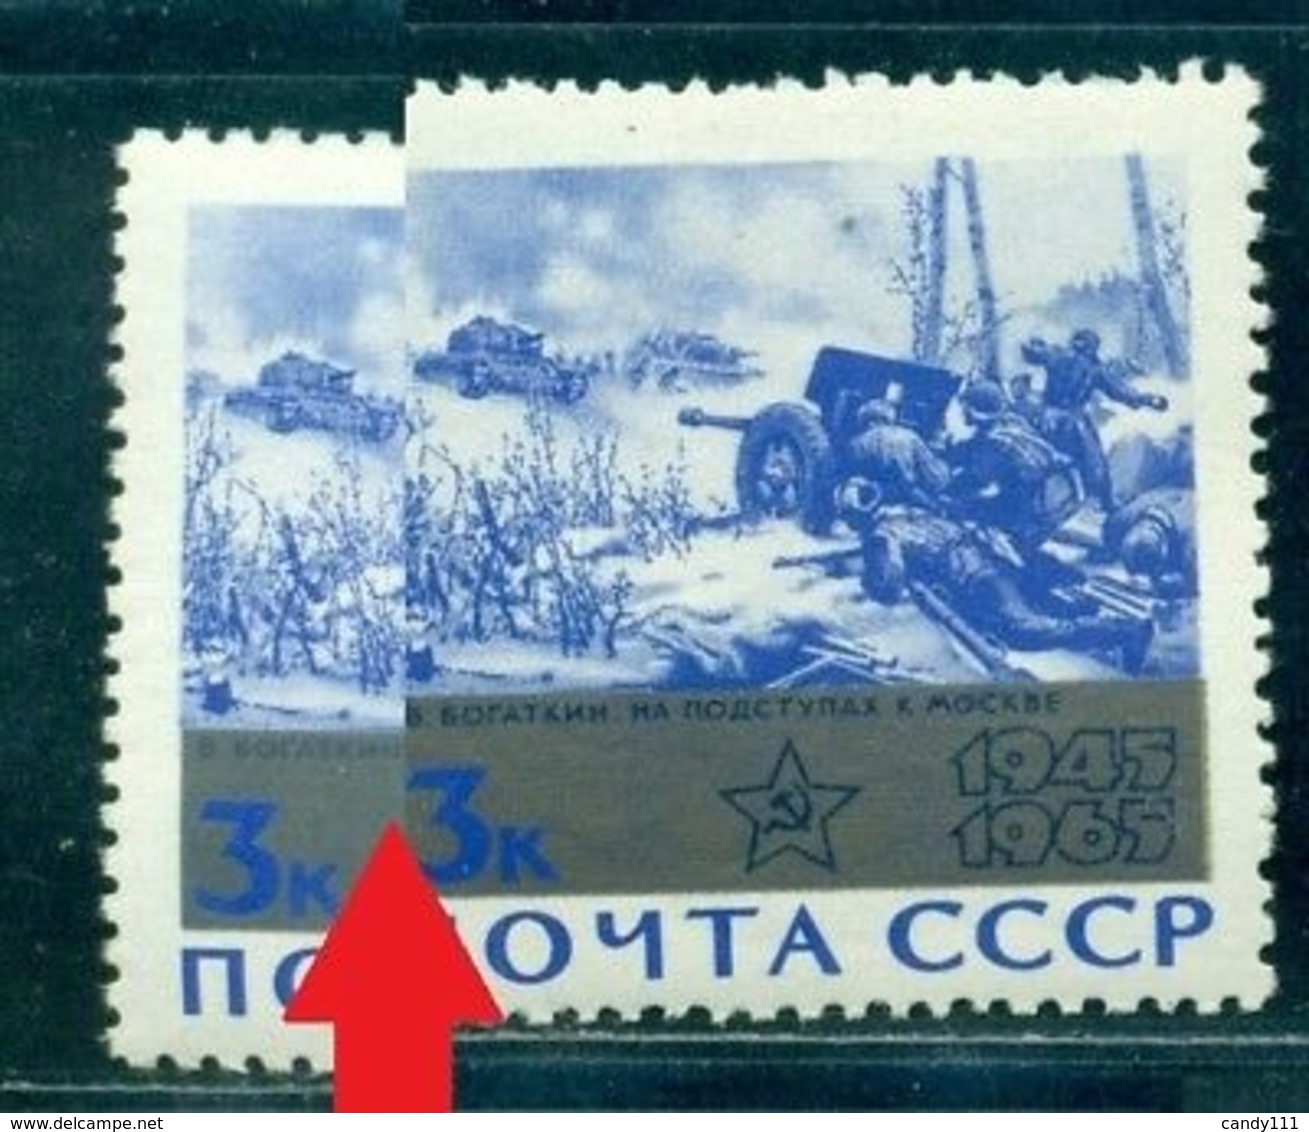 1965 Victory,20th Ann,On Approaches To Moscow/Bogatkin,Russia,3053ab,MNH,variety - Varietà E Curiosità